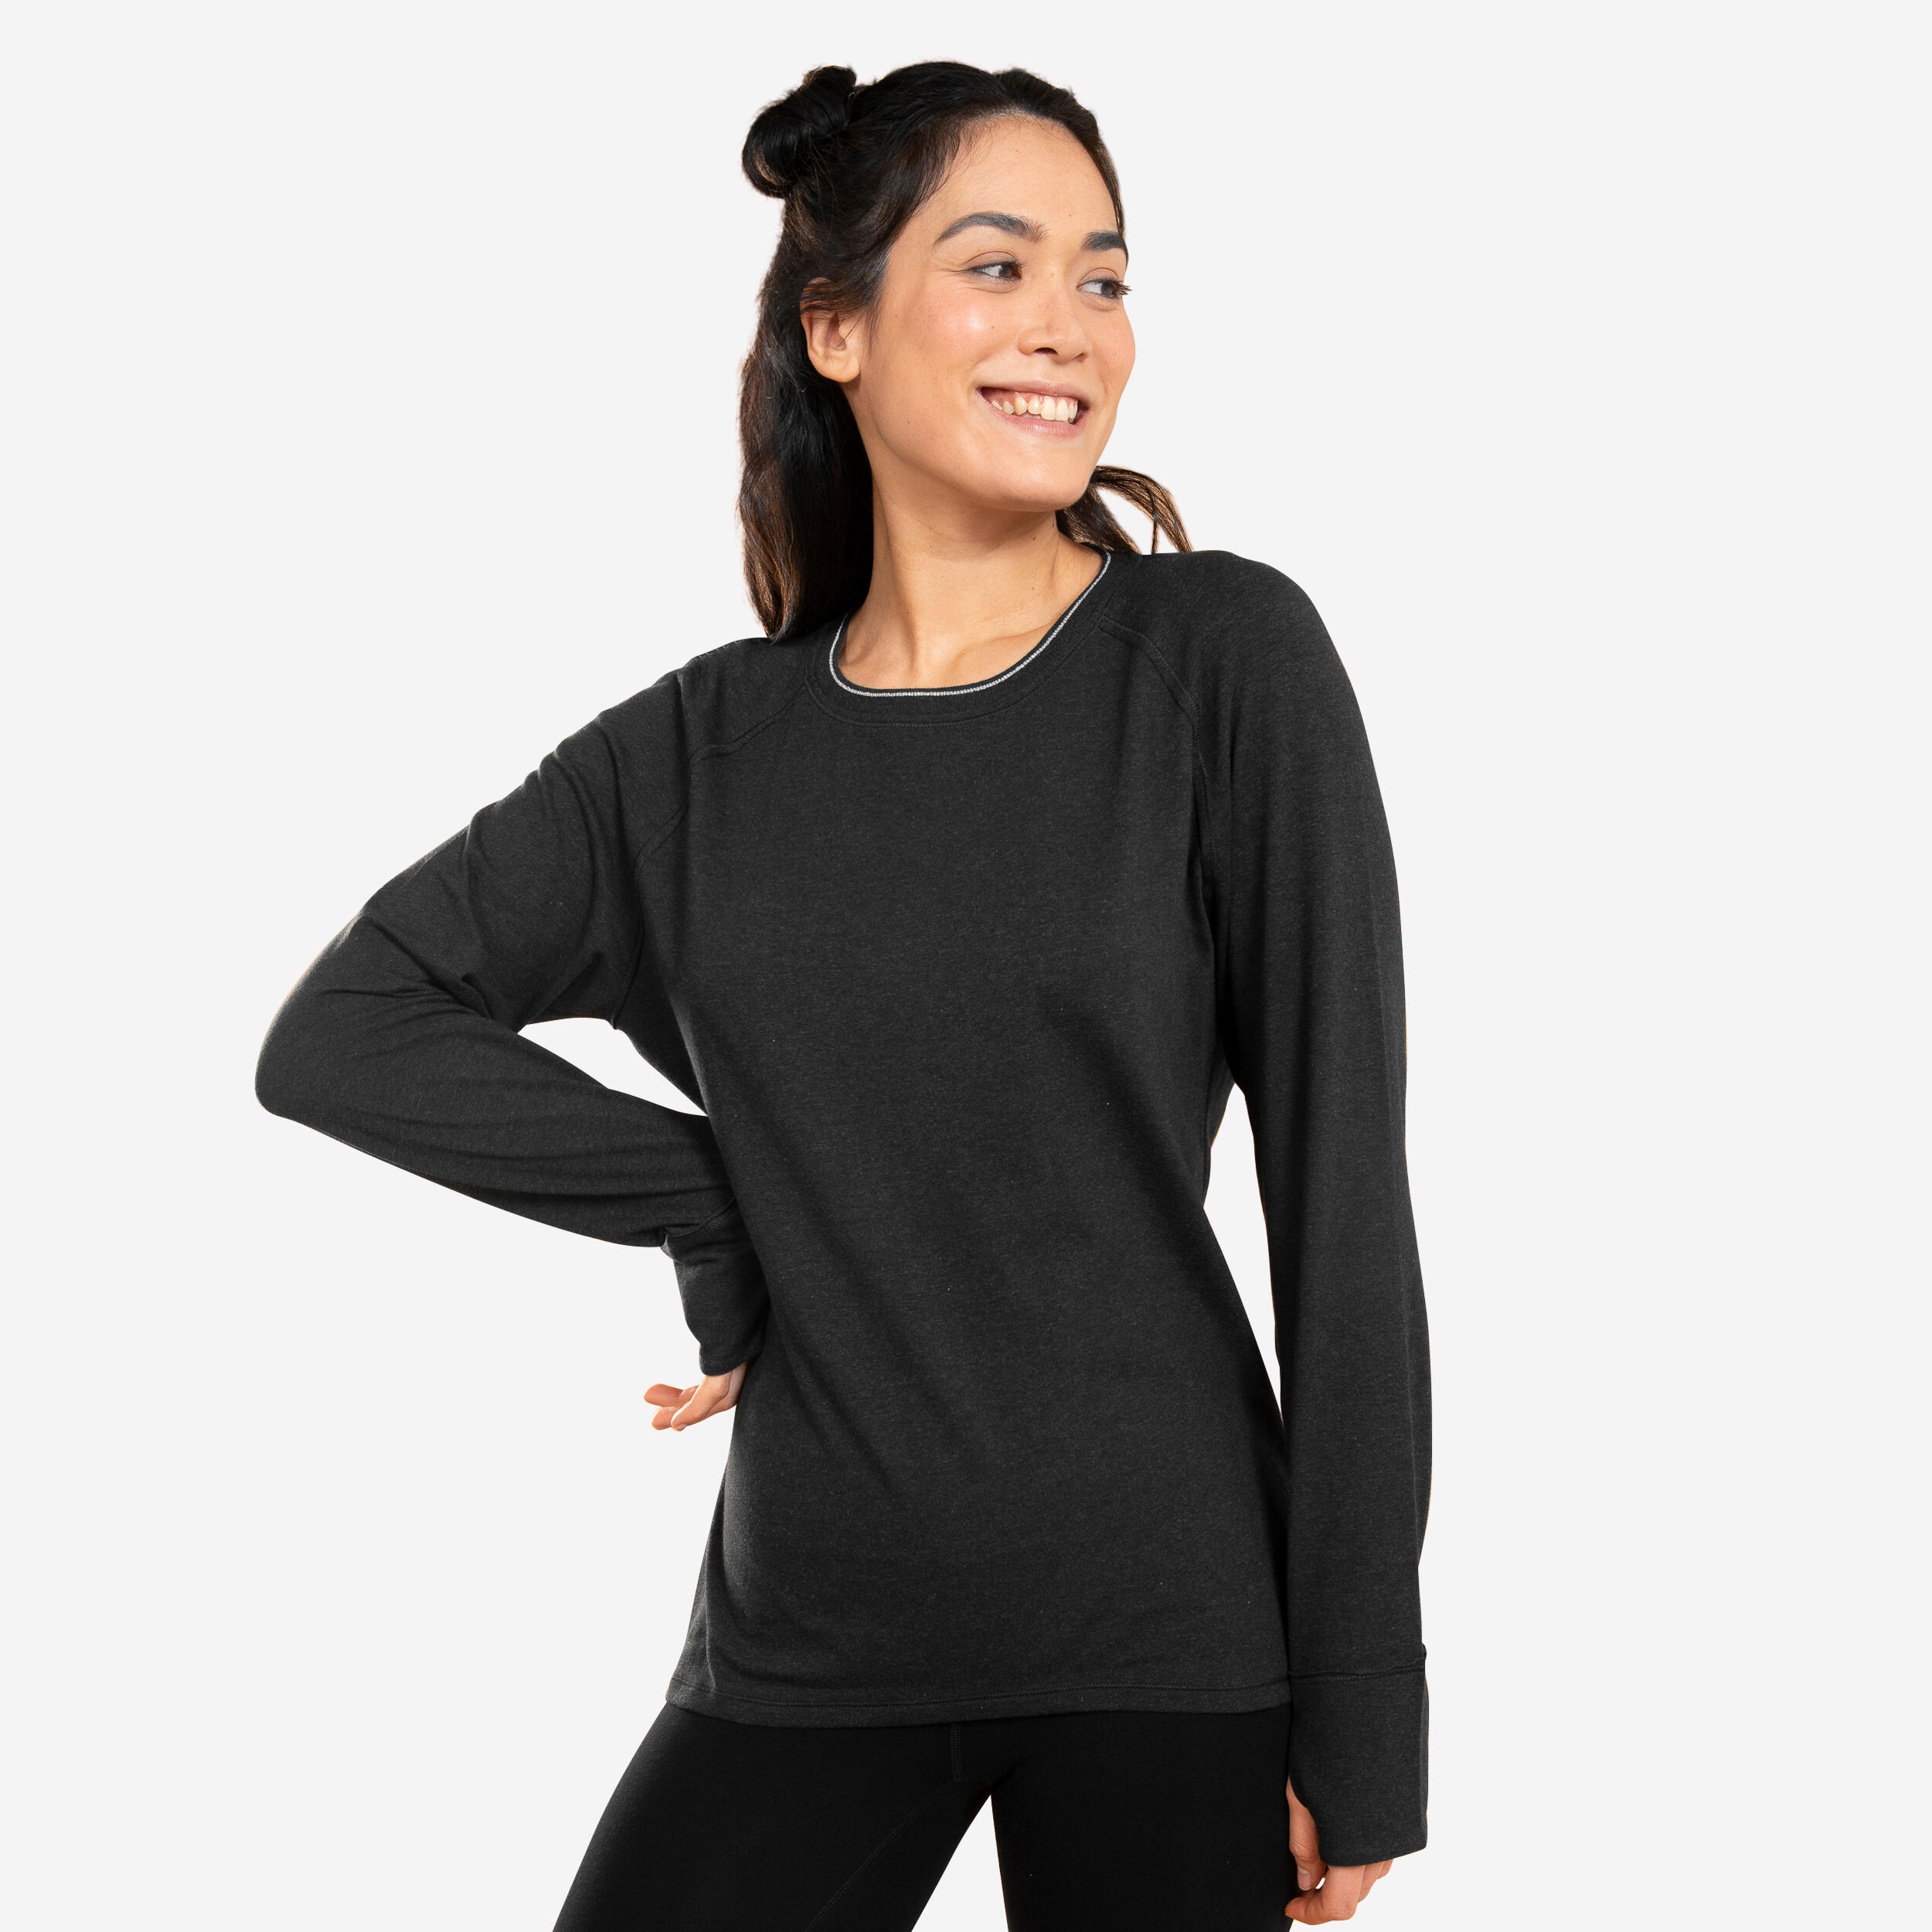 KIMJALY Women's Long-Sleeved Yoga T-Shirt - Black